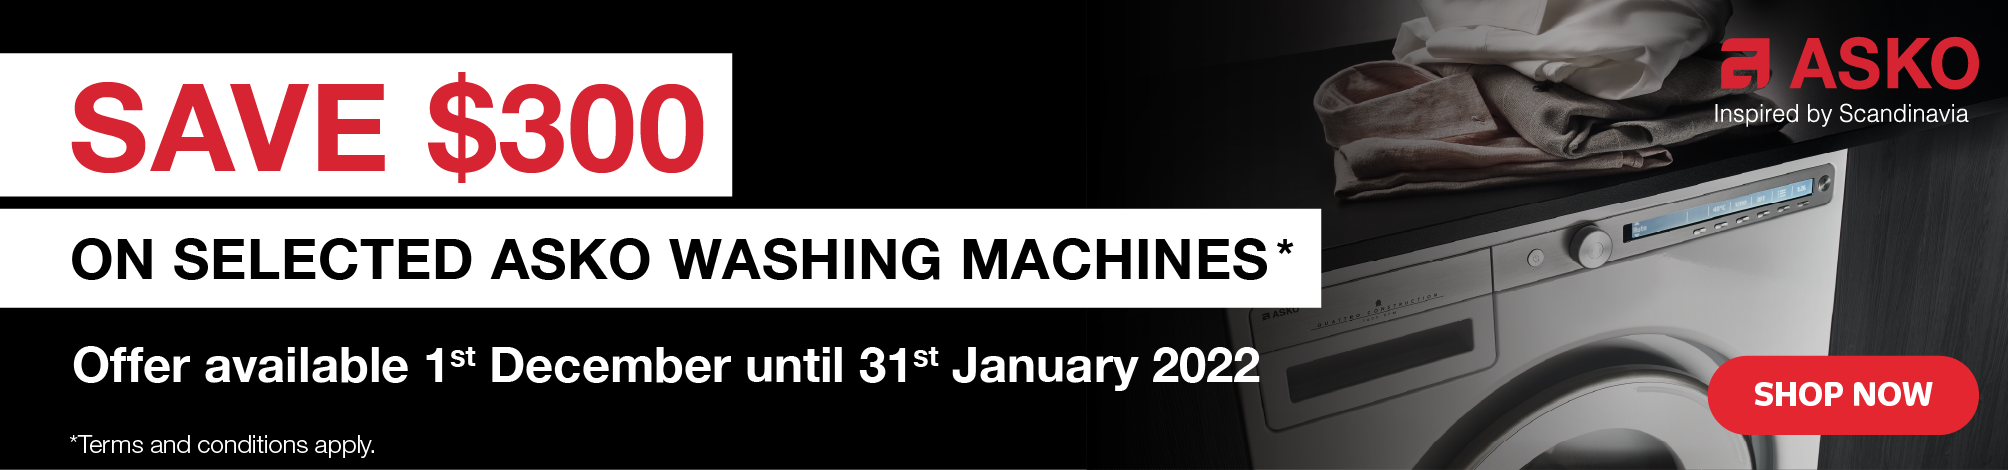 Save $300 On Selected ASKO Washing Machines